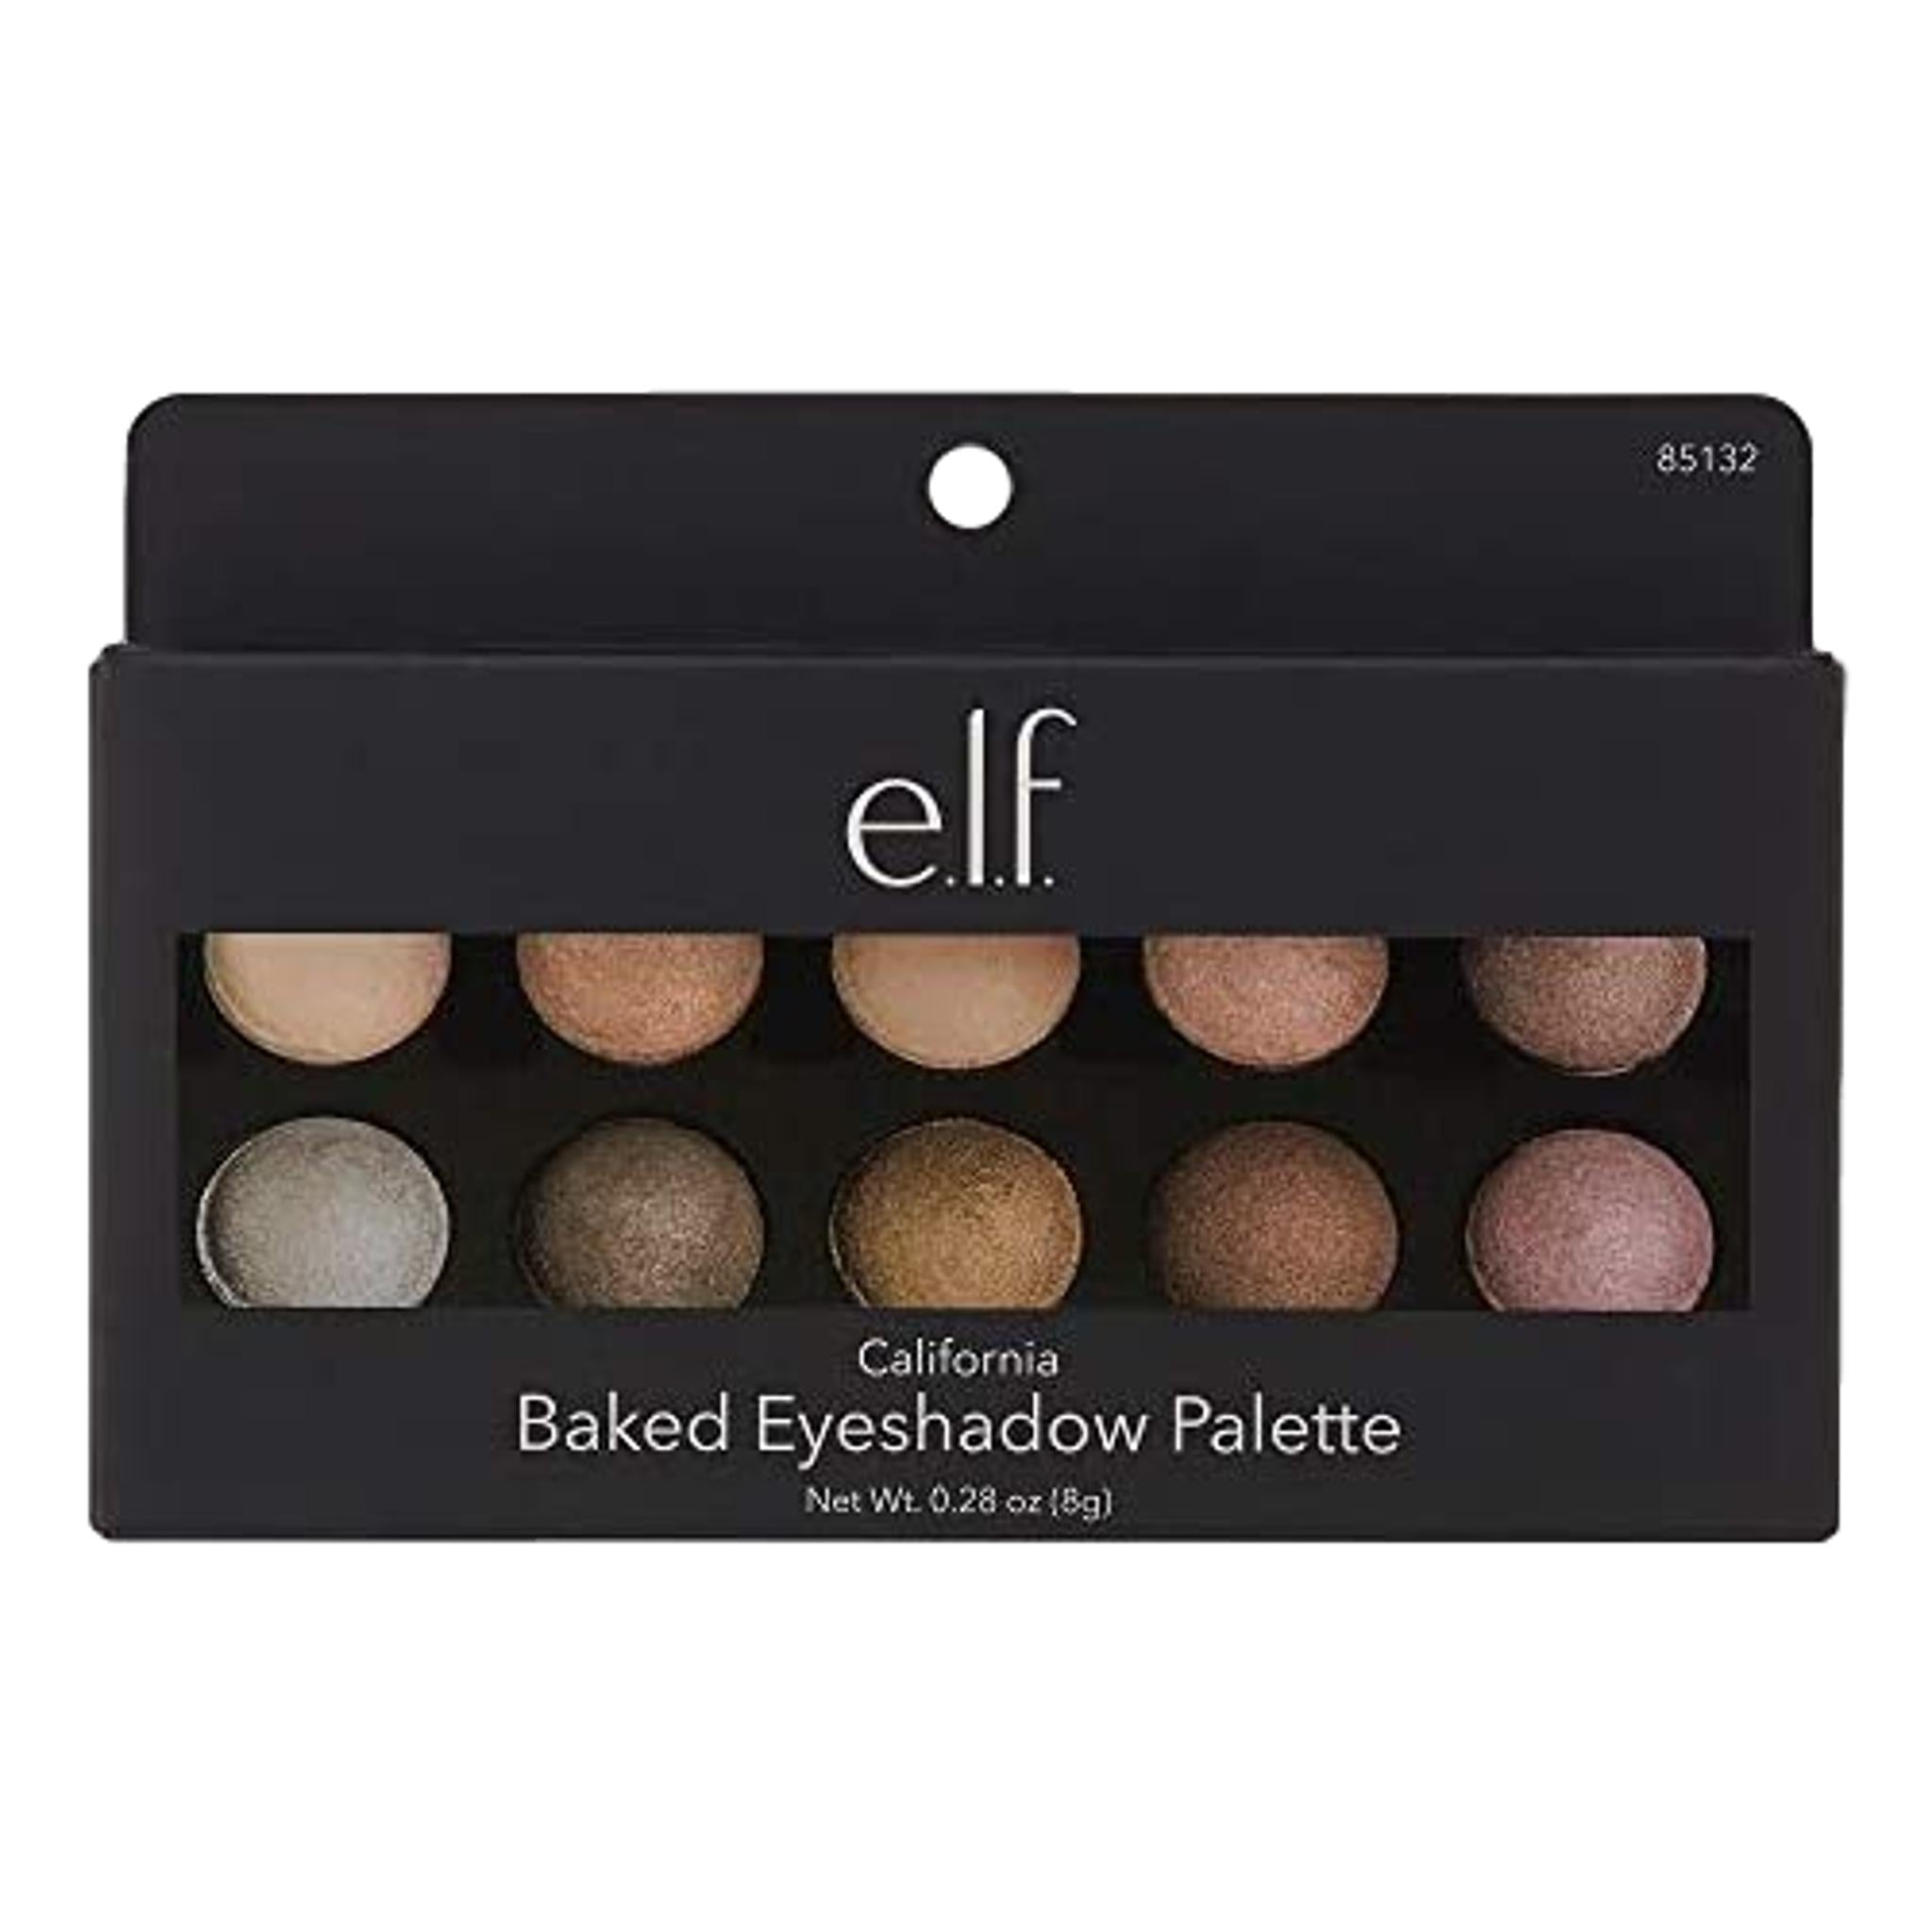 E.L.F. Baked Eyeshadow Palette - California, 8g, eyeshadow palette, London Loves Beauty